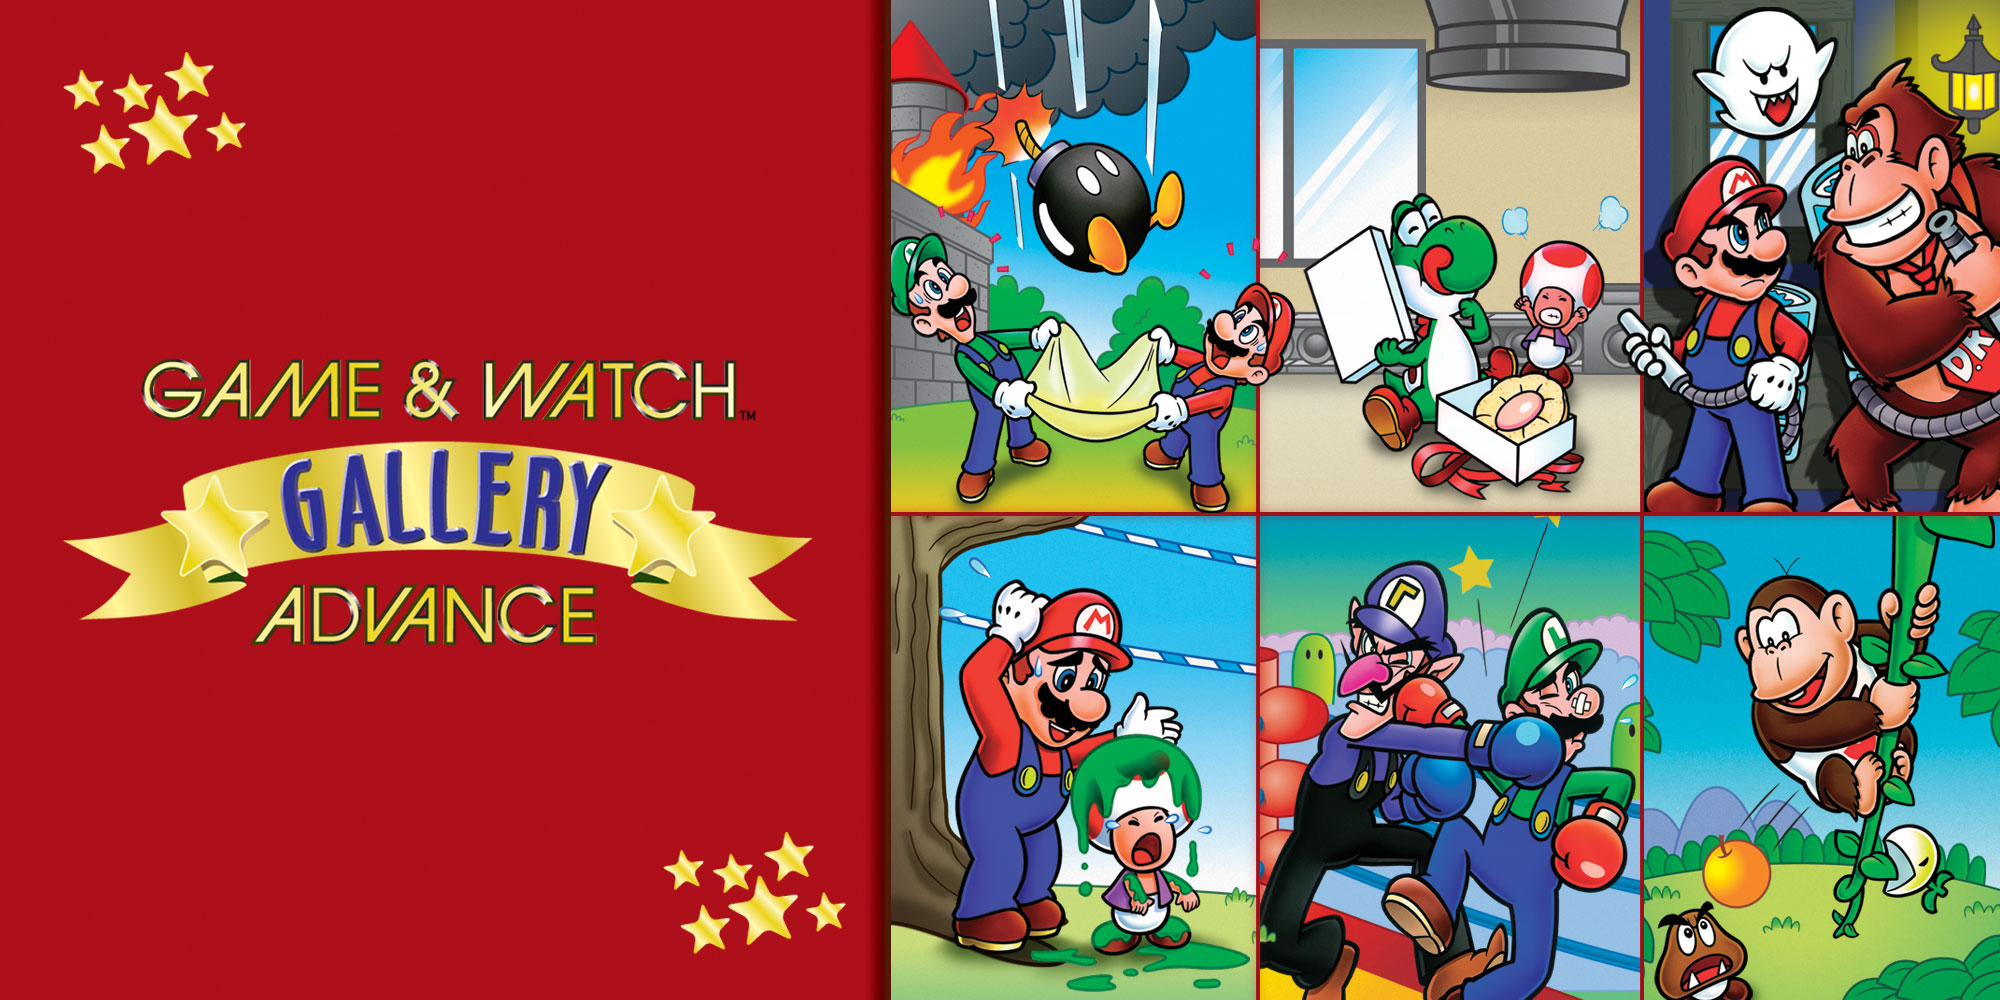 Game  Watch Gallery Advance  Game Boy Advance  Games  Nintendo